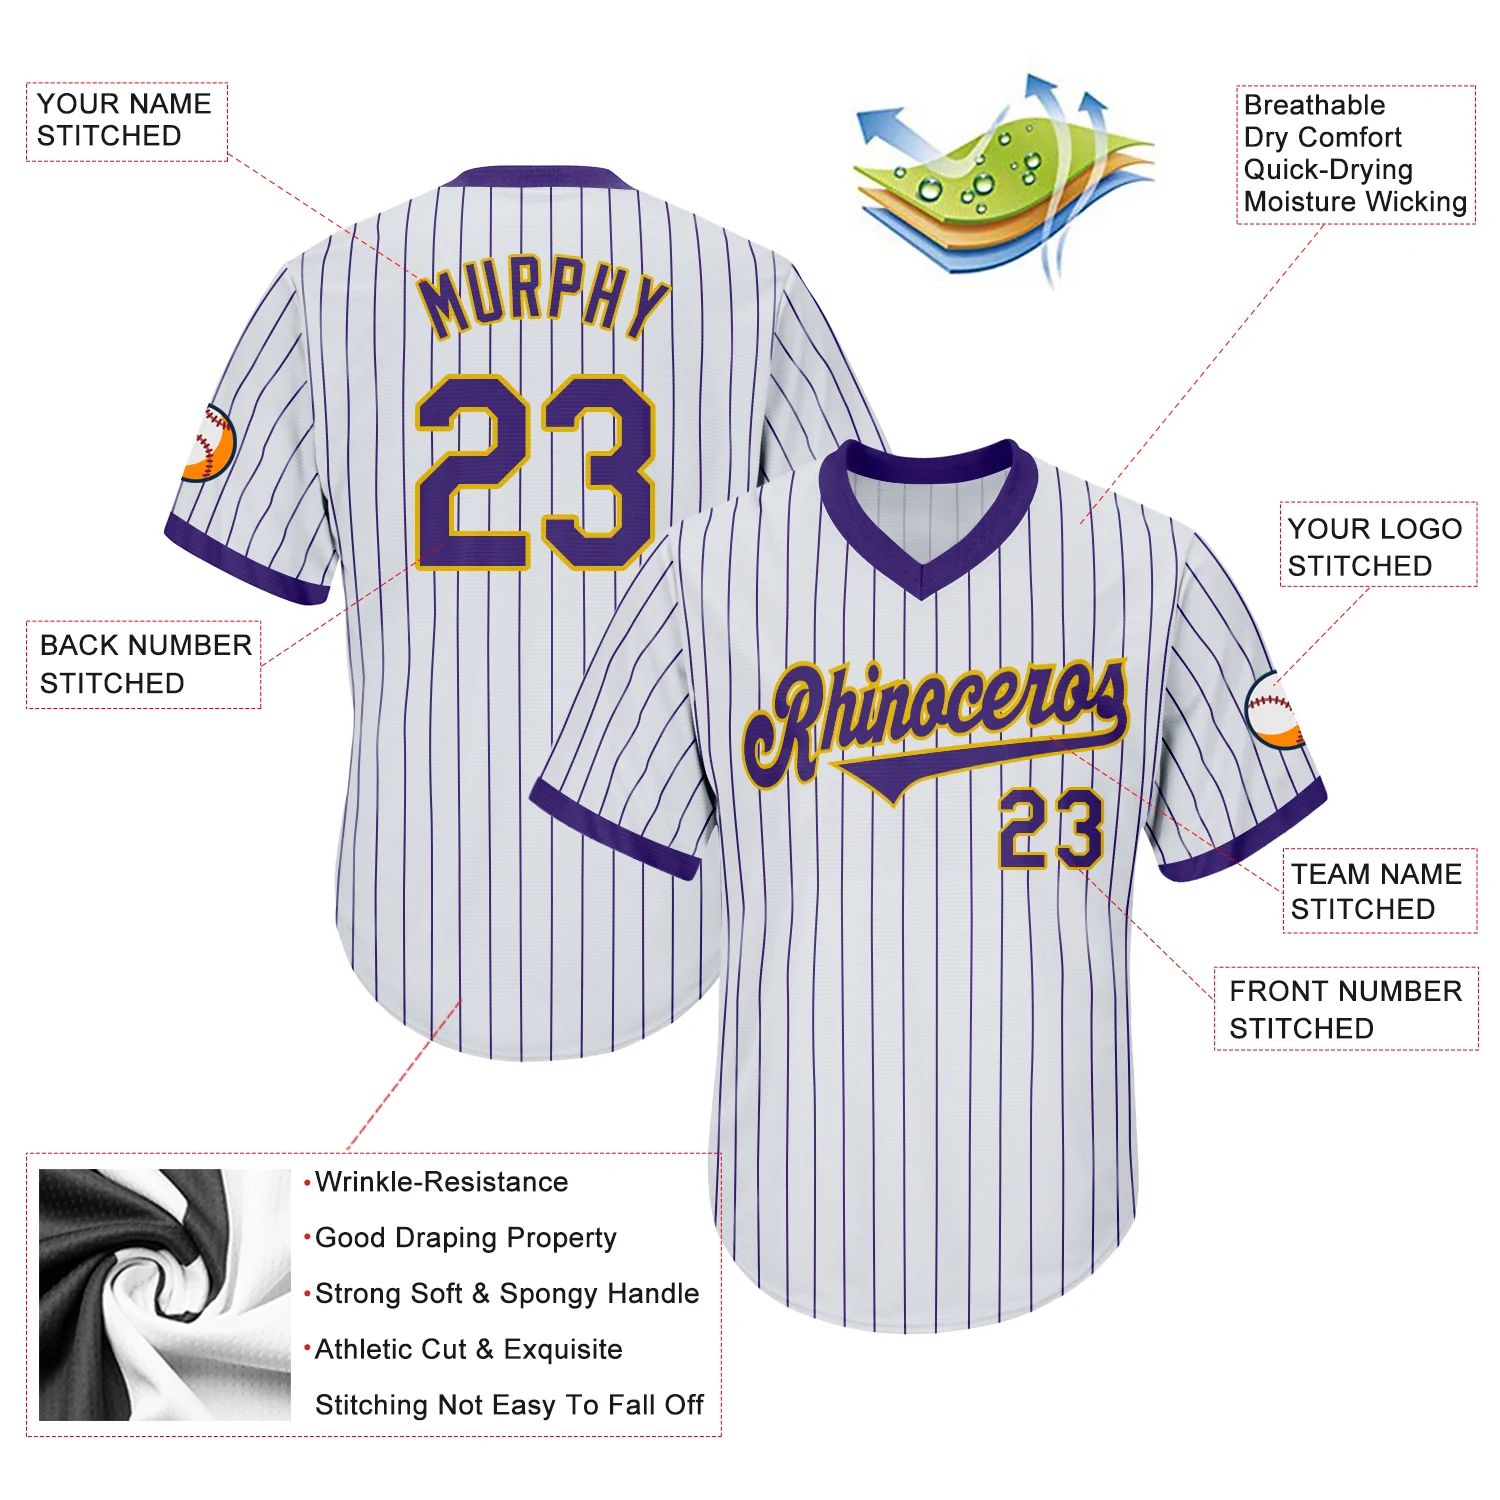 build-gold-white-purple-strip-baseball-purple-jersey-authentic-throwback-ewhite02586-online-4.jpg